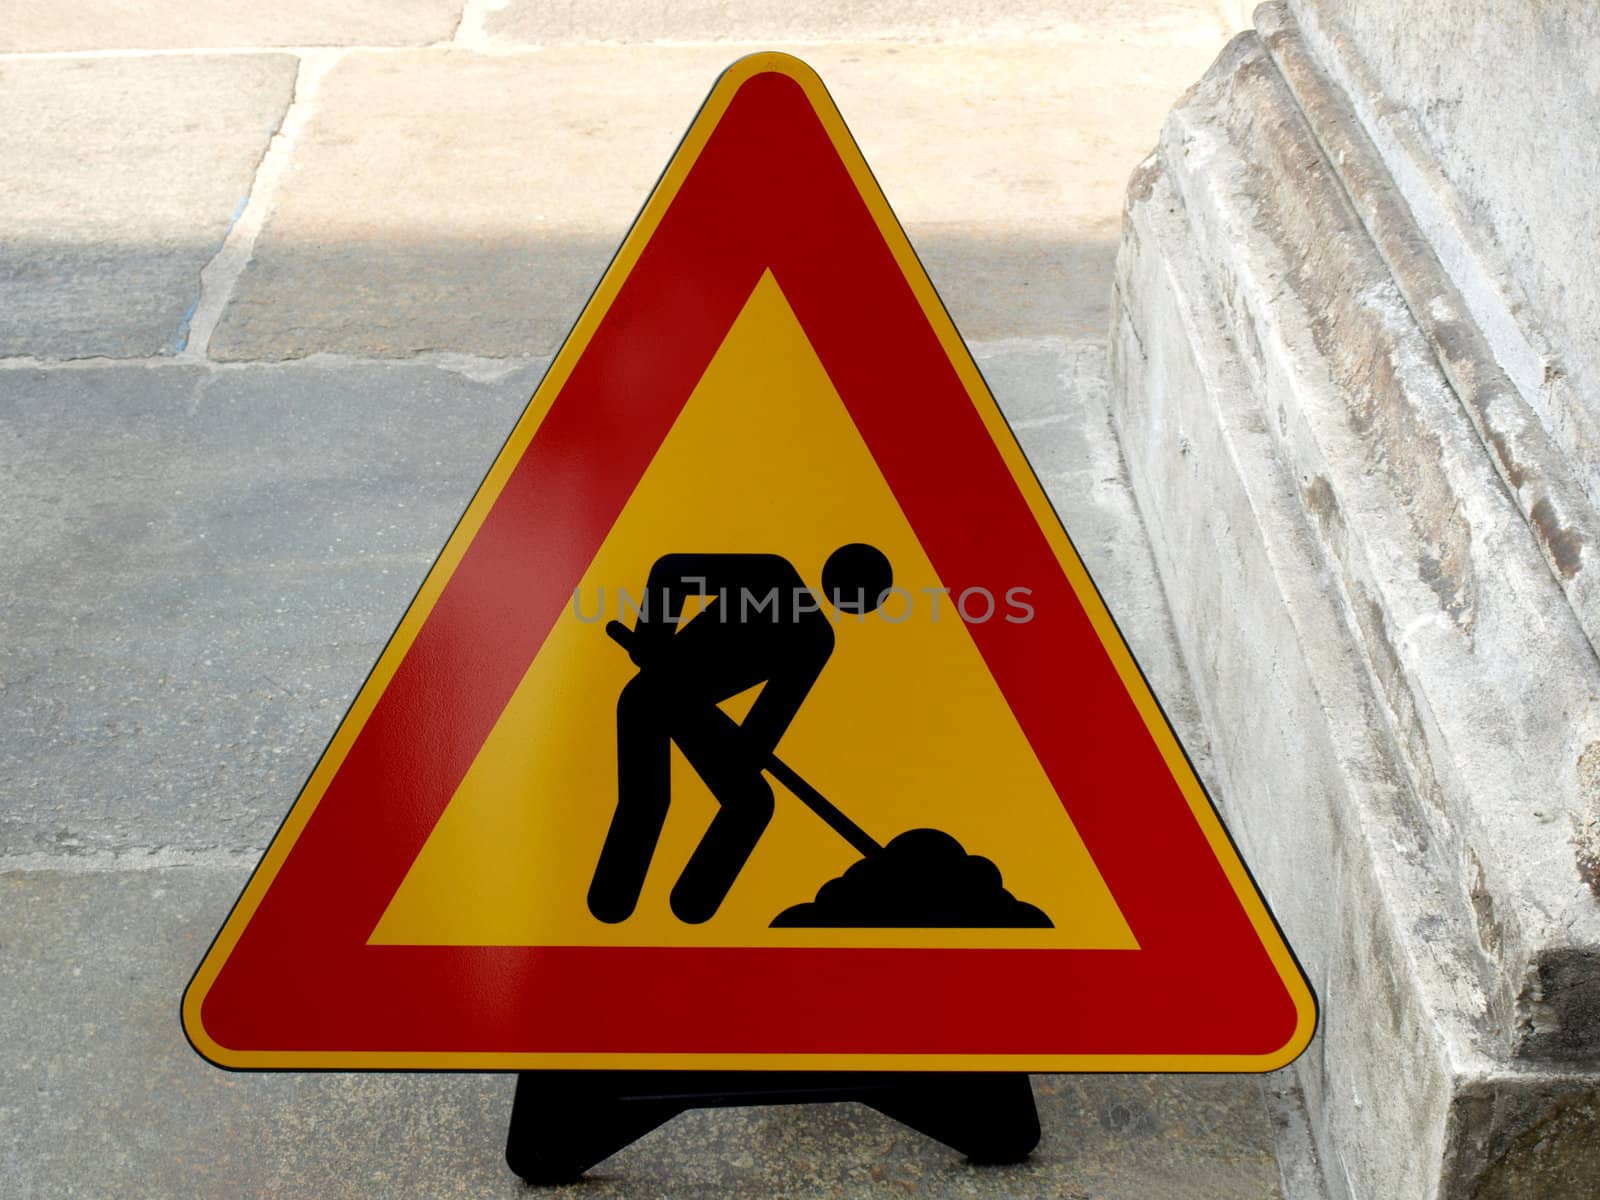 Road work sign on a sidewalk pavement